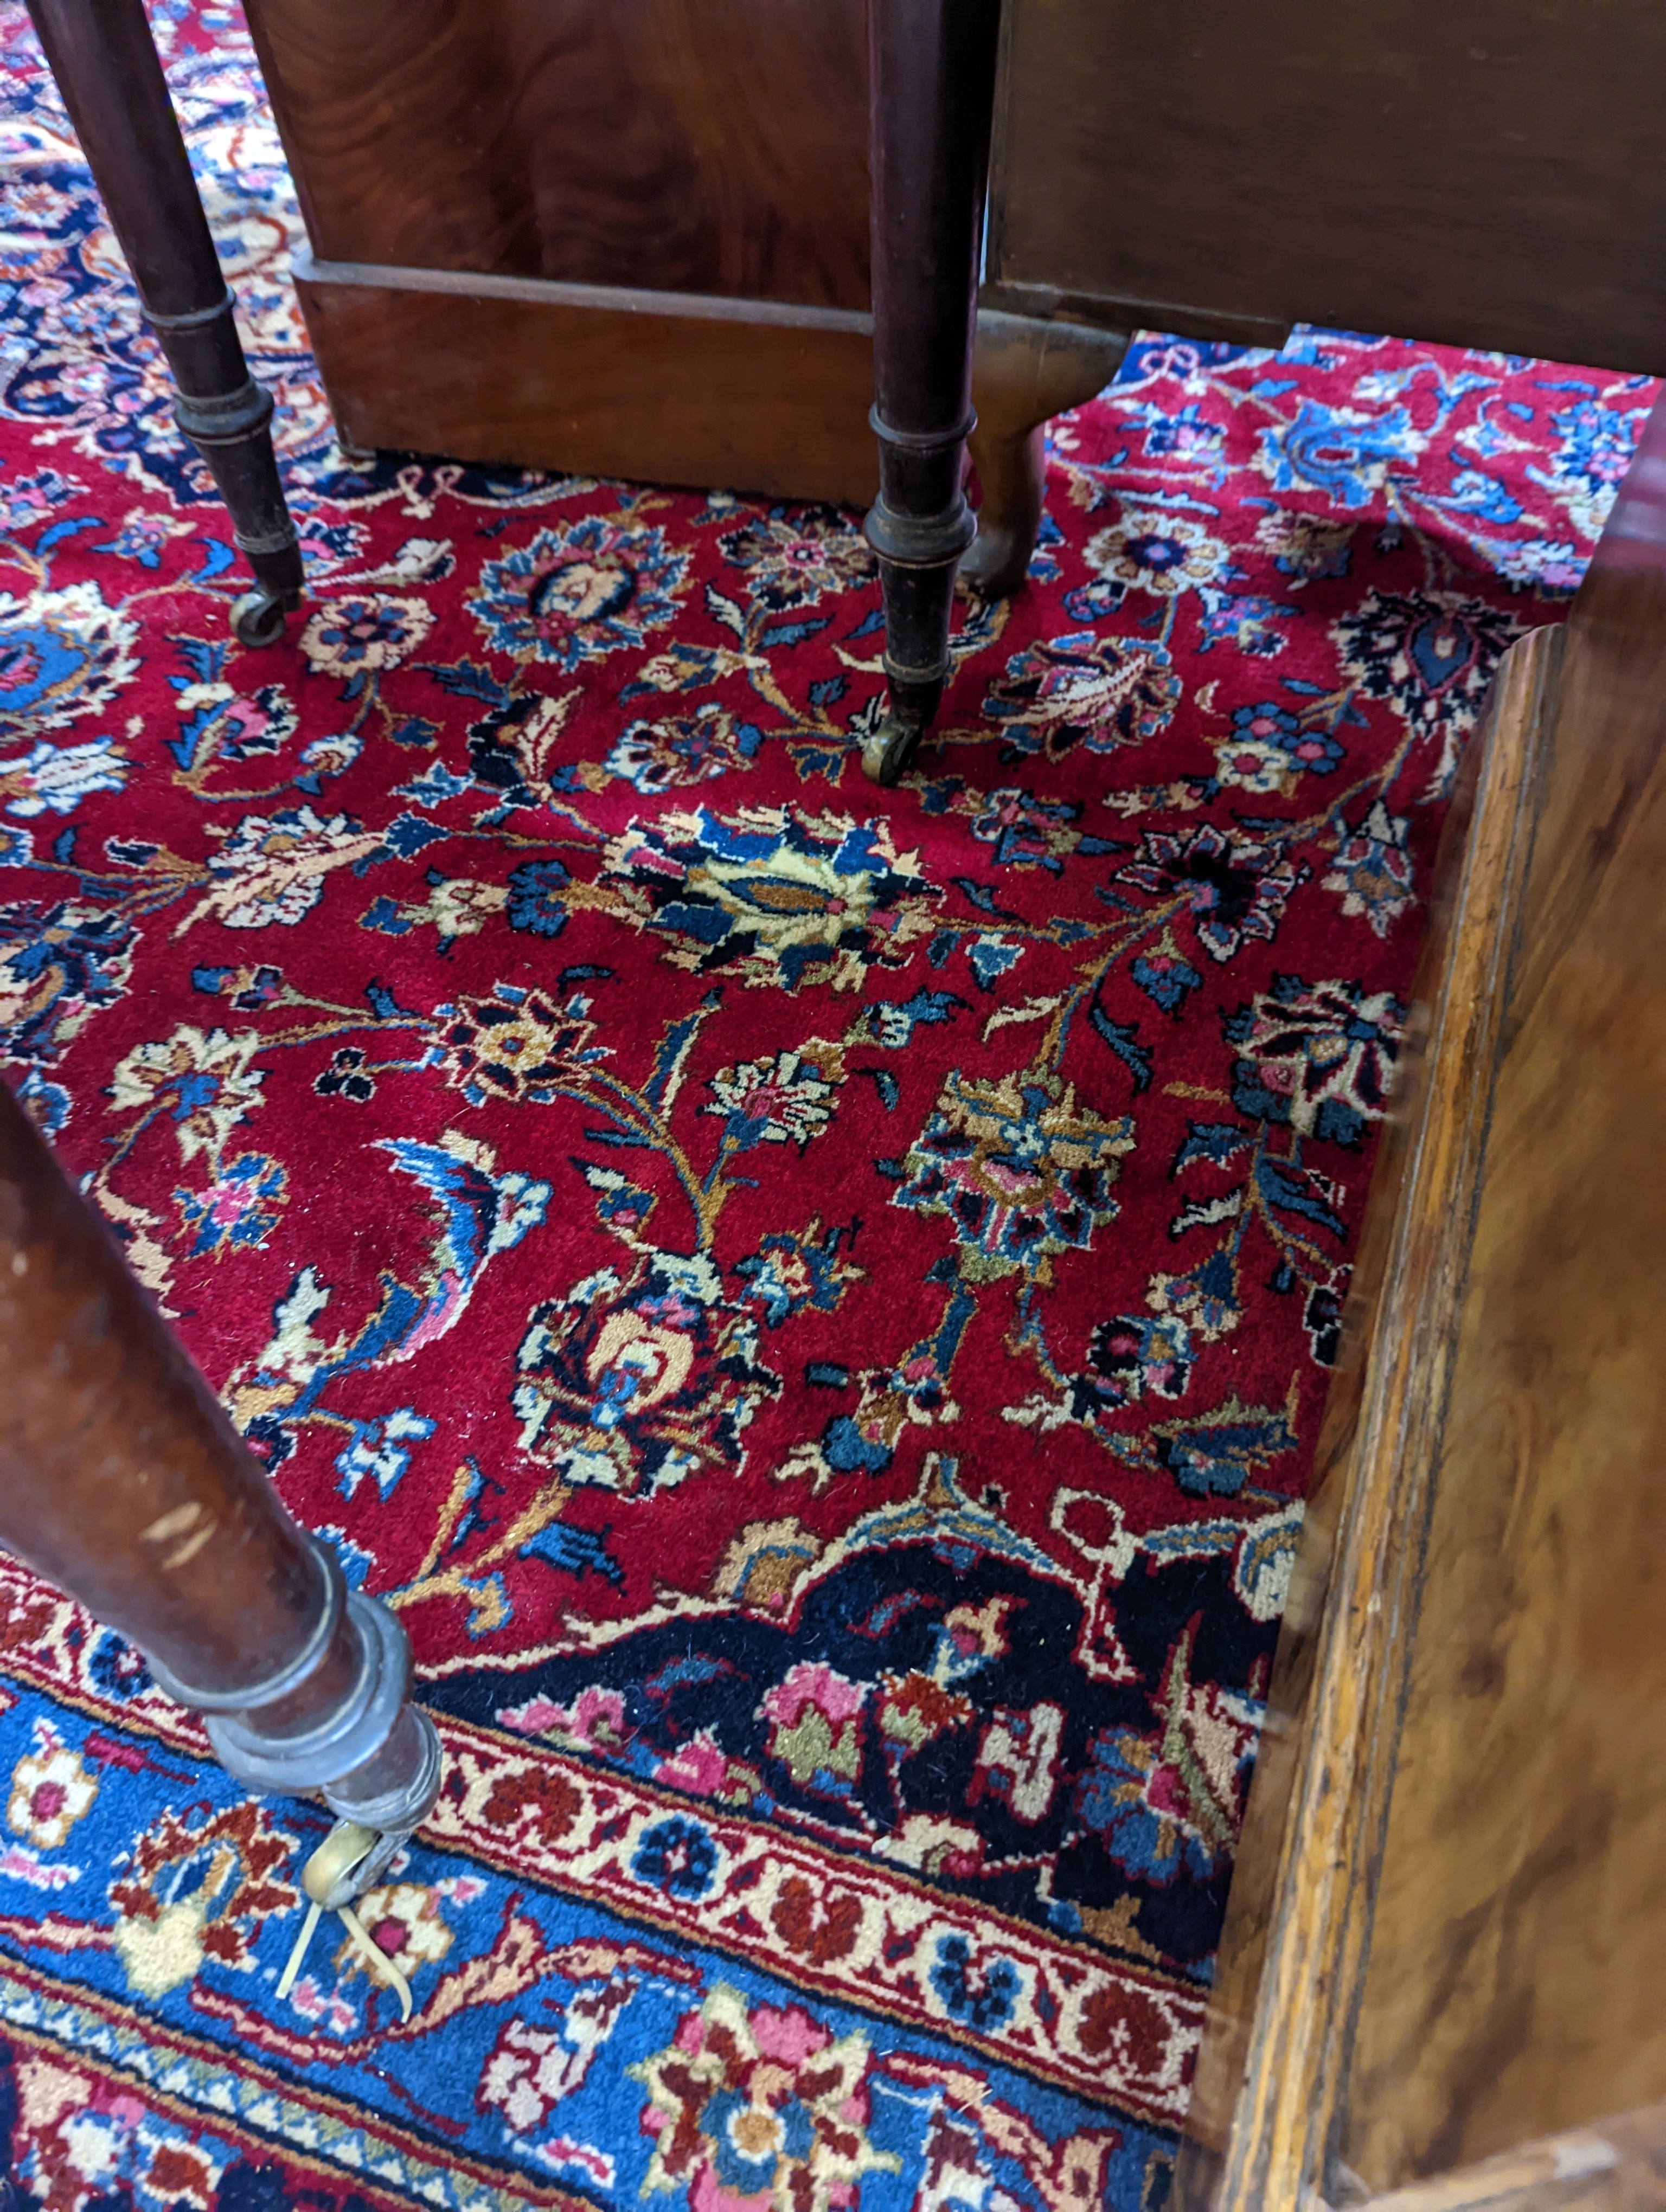 A Kashan burgundy ground carpet, 380 x 300cm